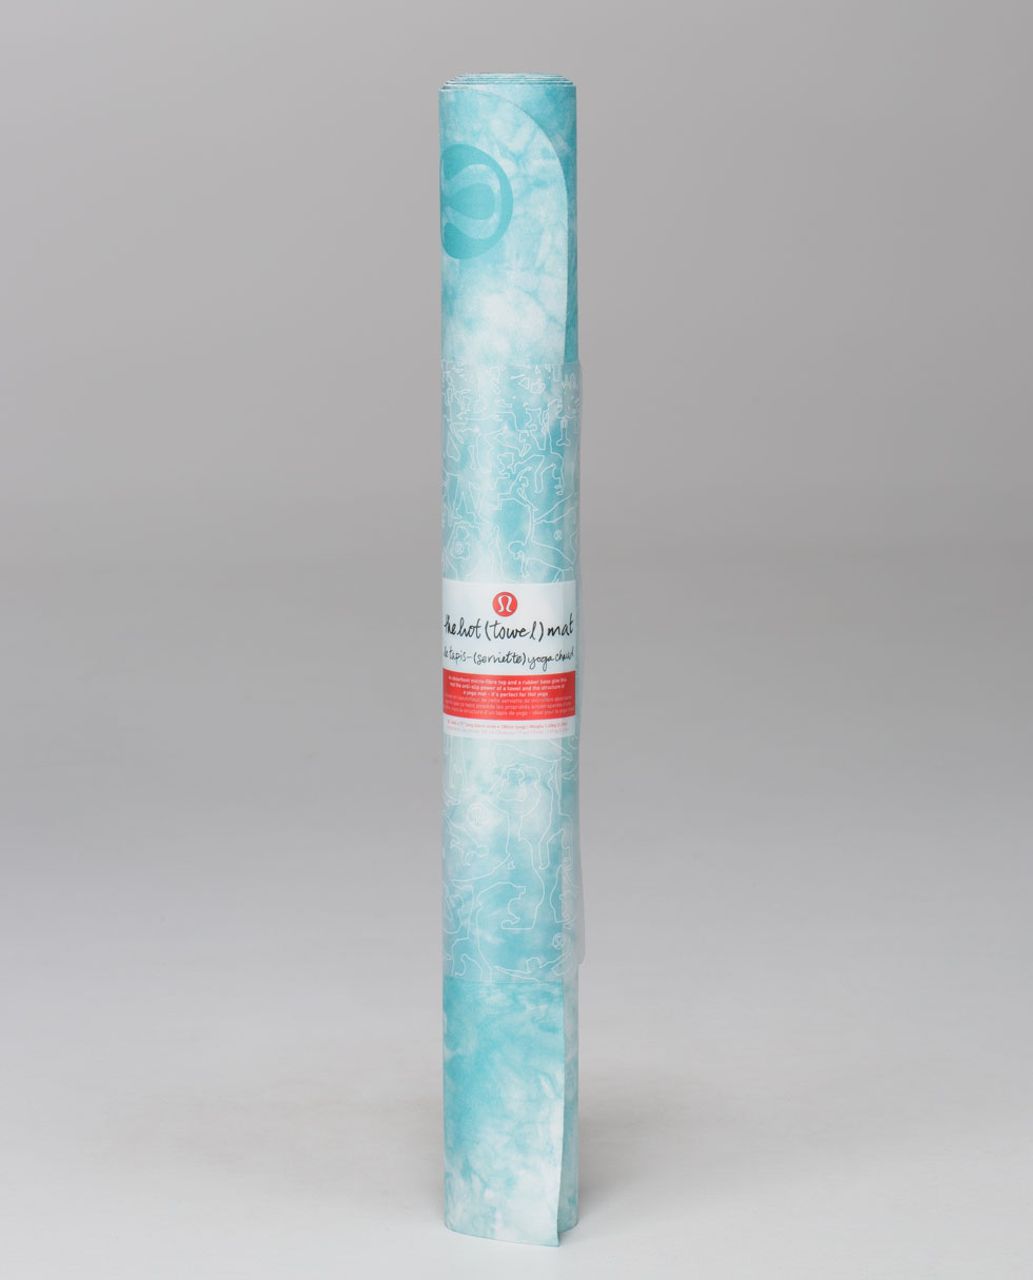 Lululemon The Hot (Towel) Mat - Giant Spray Dye Blue Tropics / Deep Coal